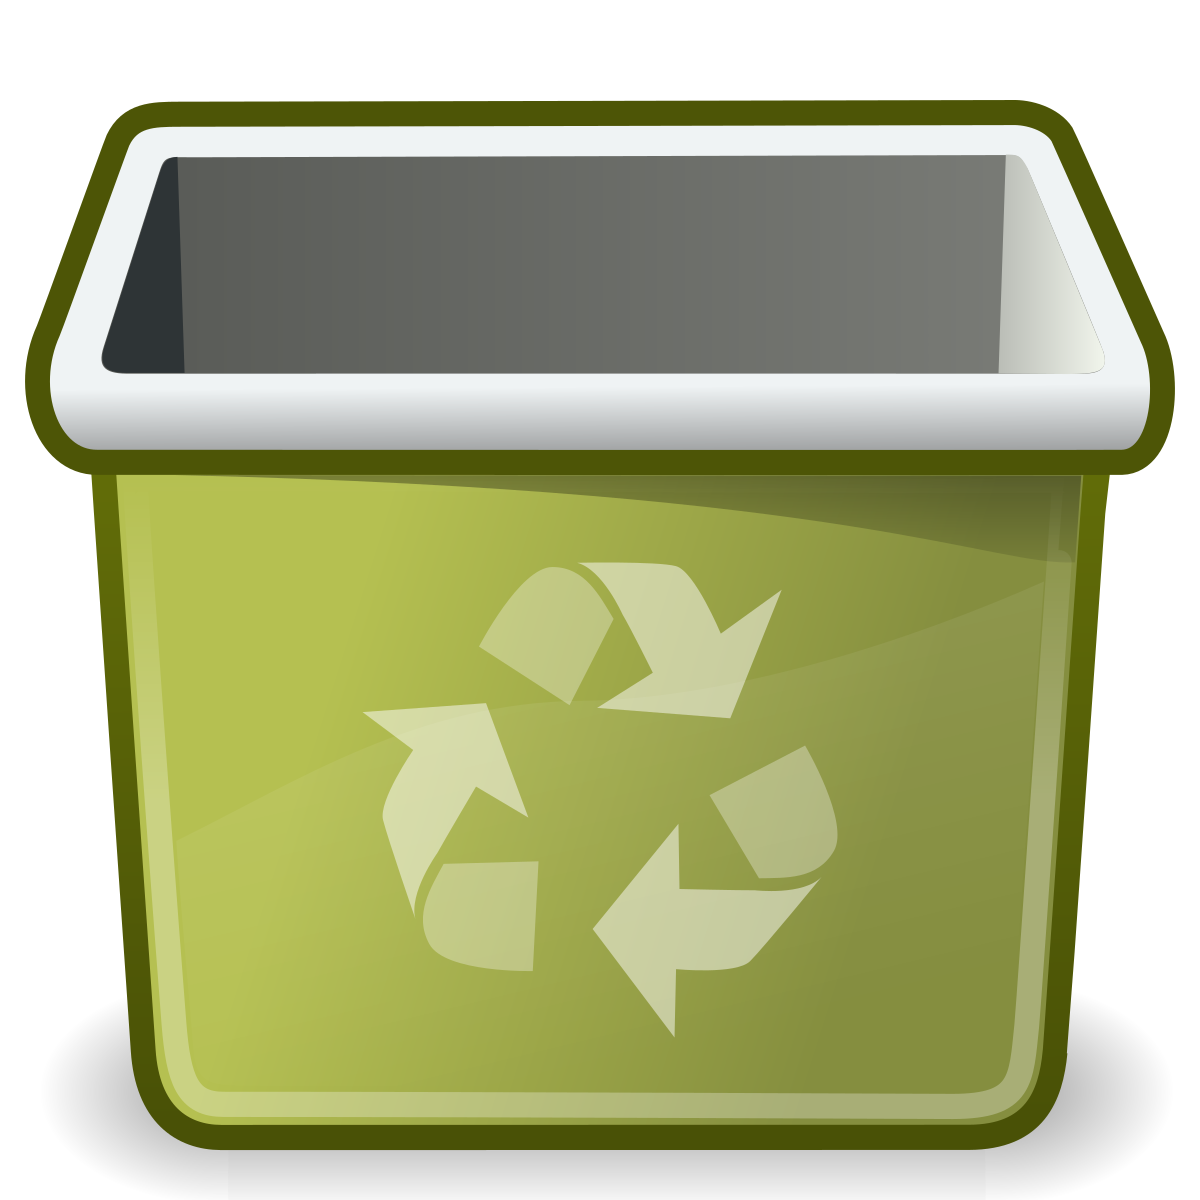 Recycle Bin or Trash icon